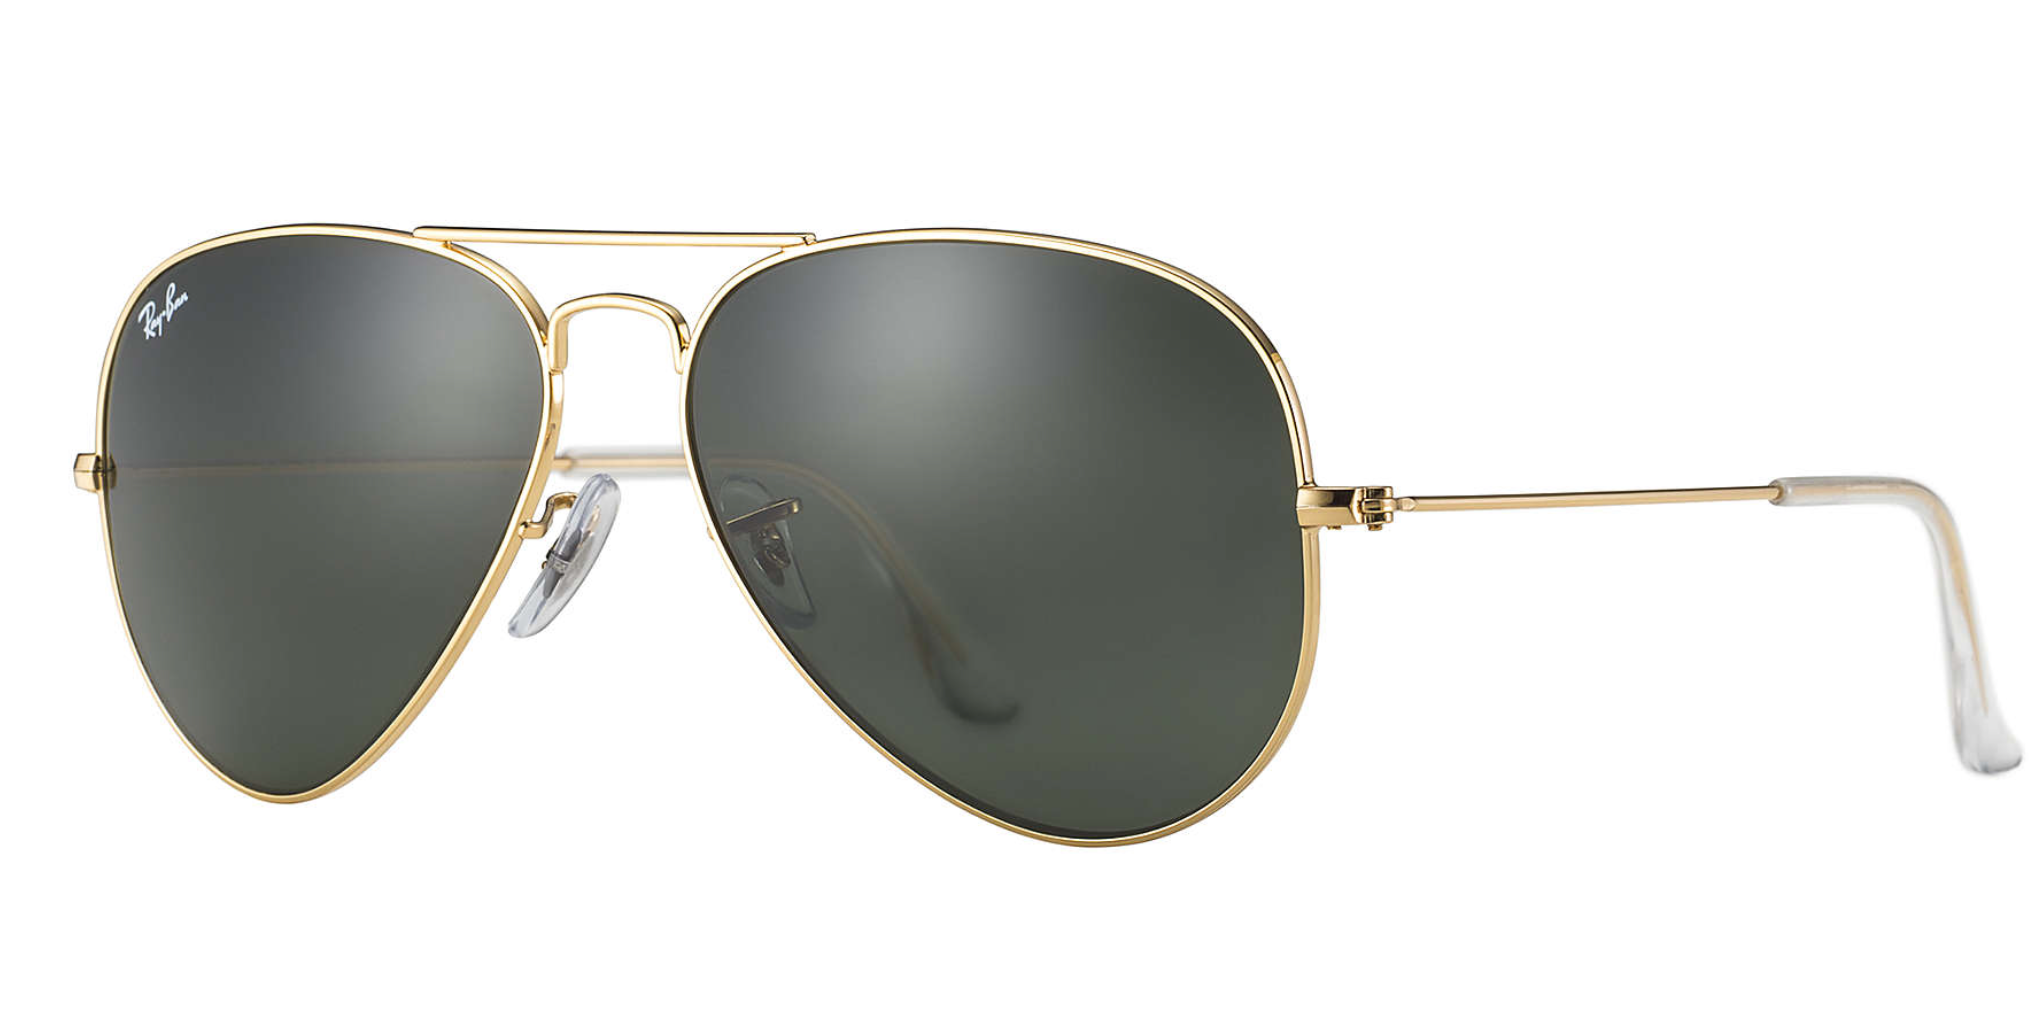 Ray-Ban Aviator Classic Sunglasses RB 3025 - Flight Sunglasses